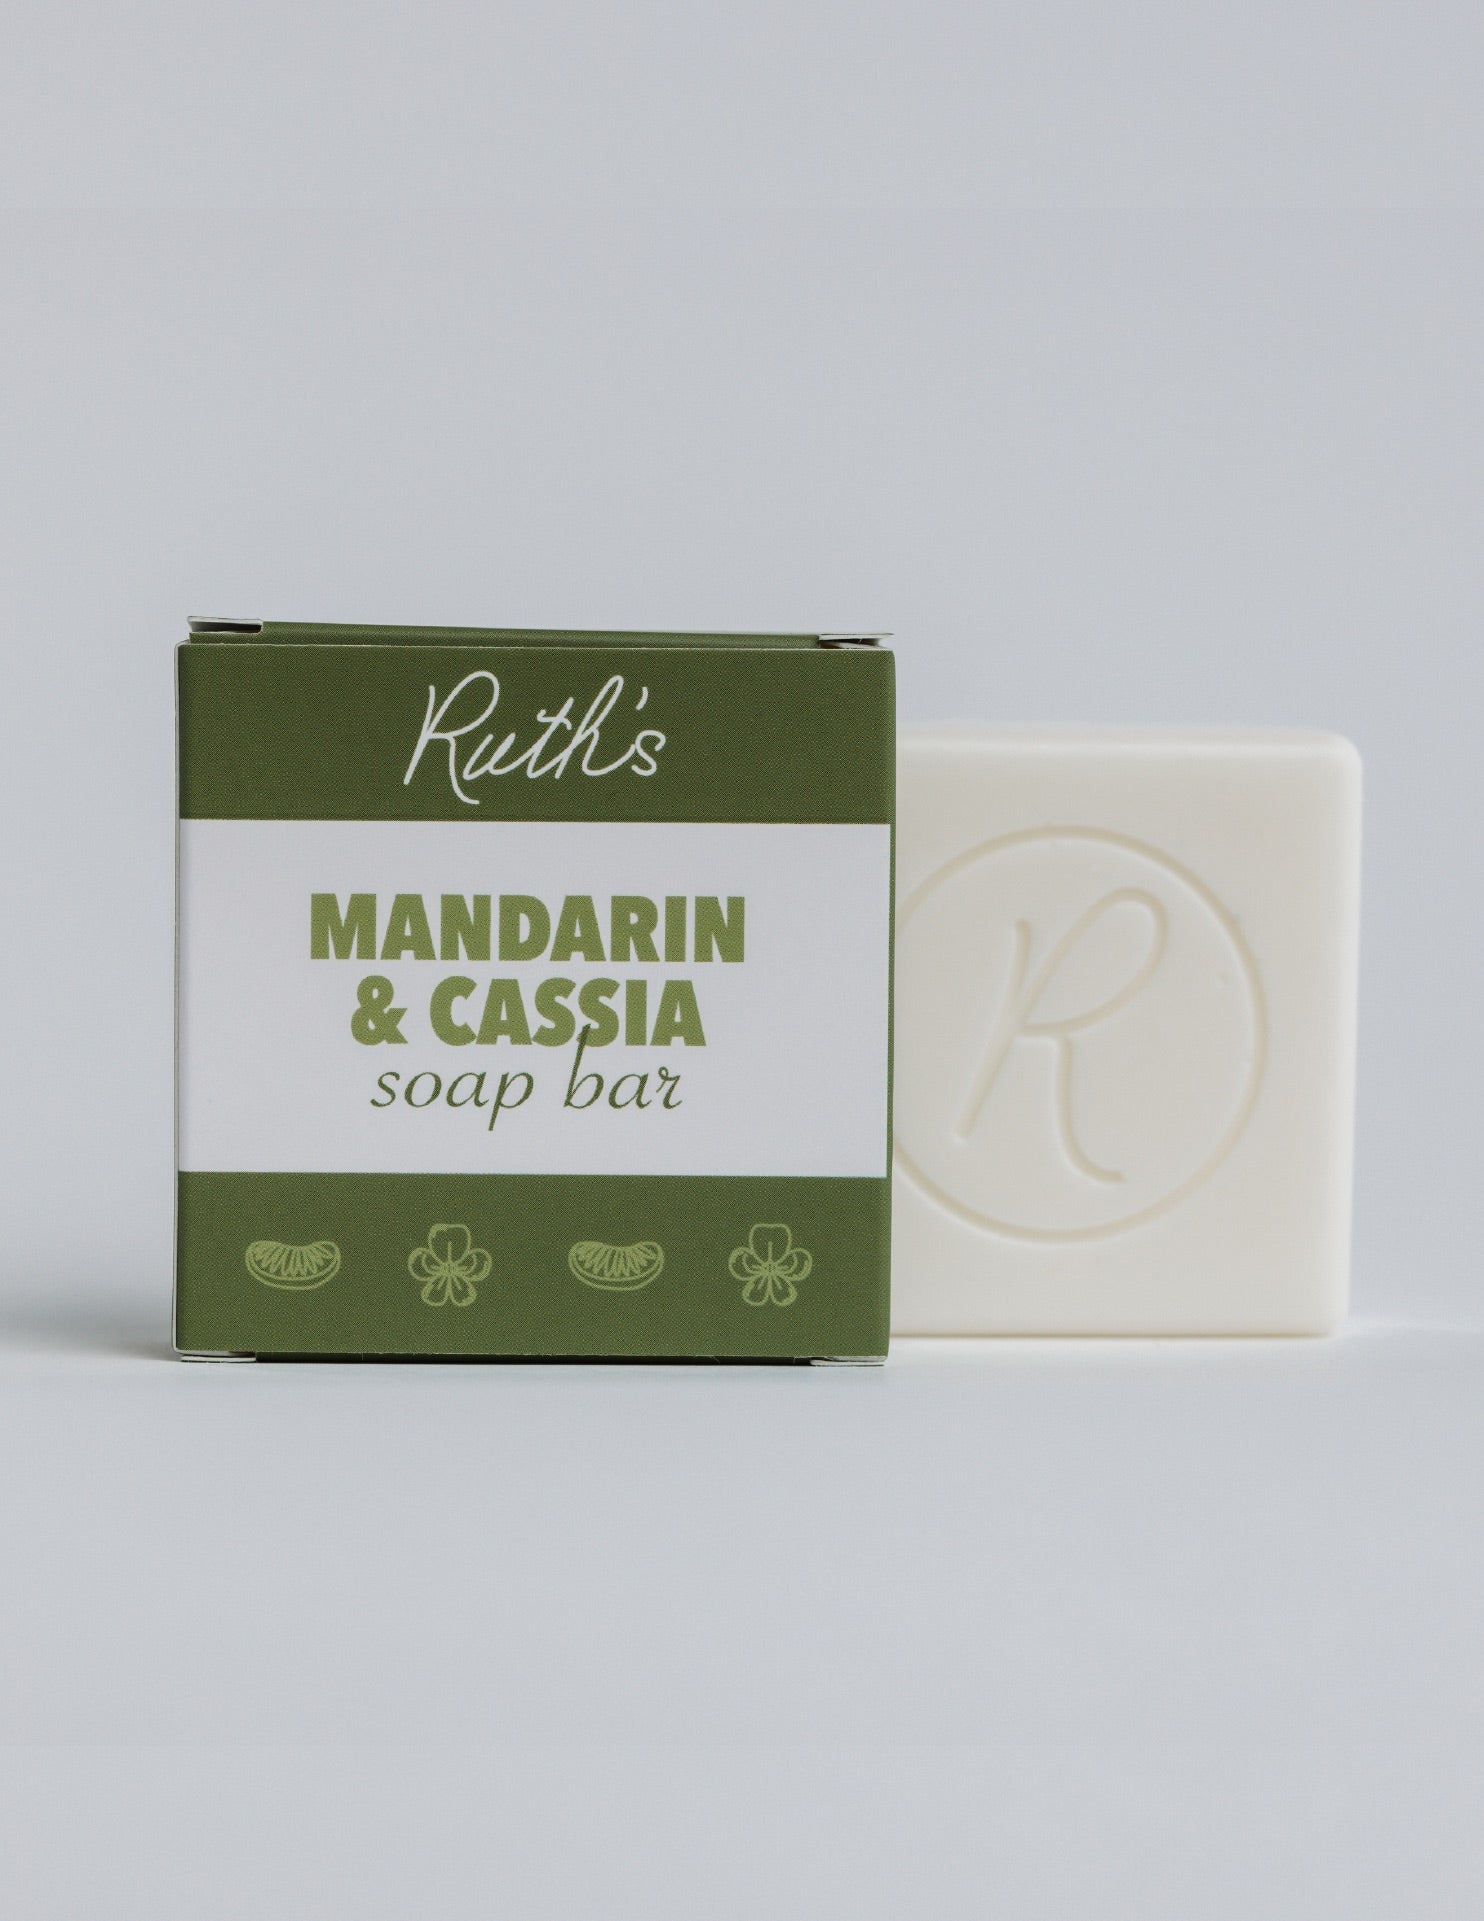 Mandarin & Cassia Soap Bar and box